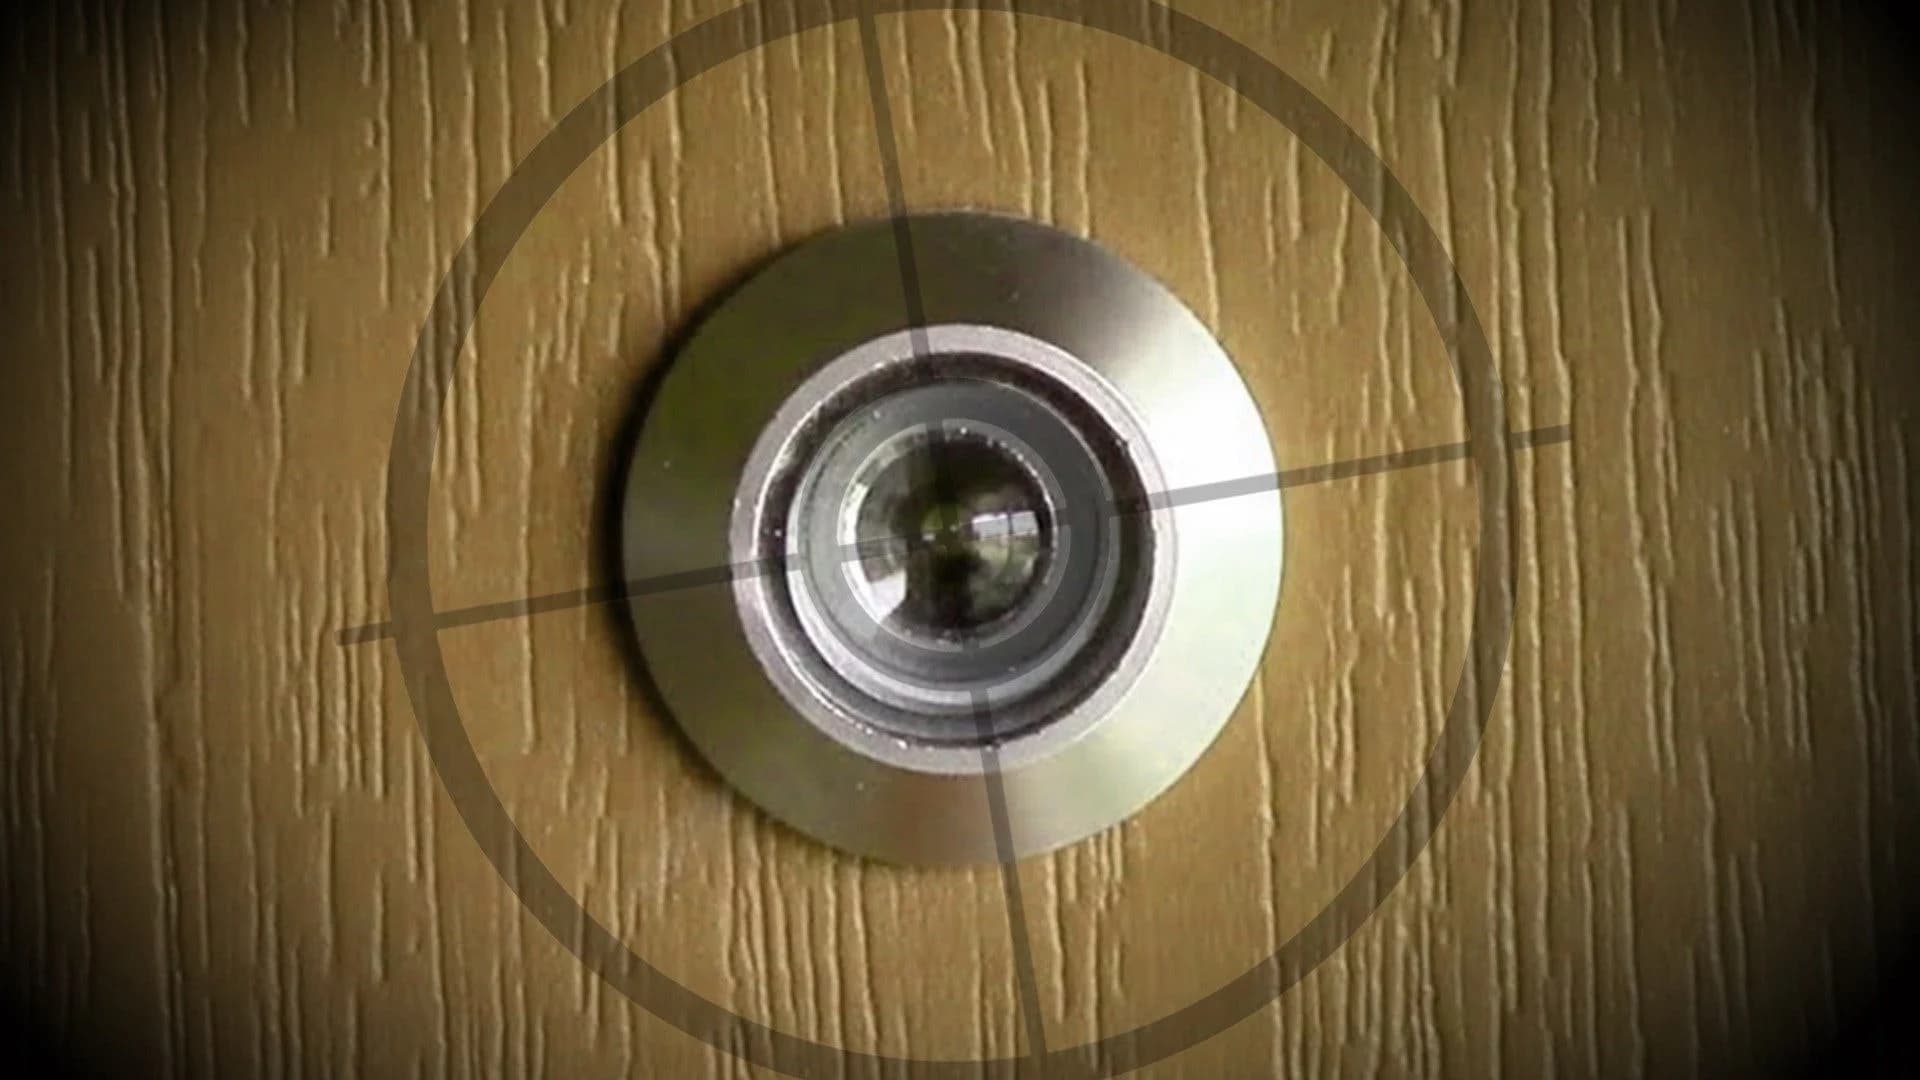 Police: Man looking through peephole of apartment door shot in eye